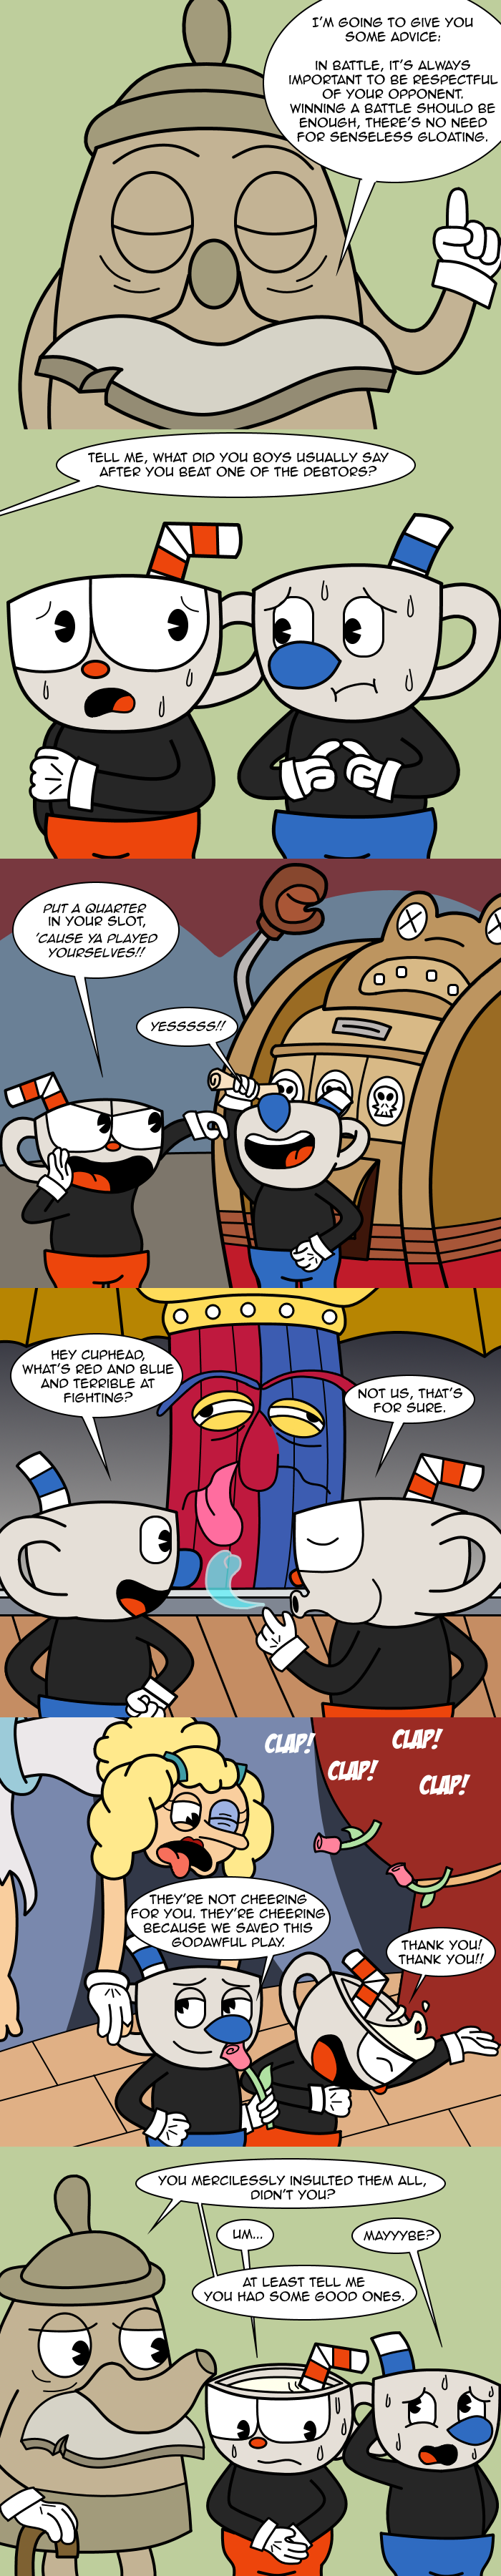 Cuphead Comic: Spitroasting by ElectricBlueTempest on DeviantArt